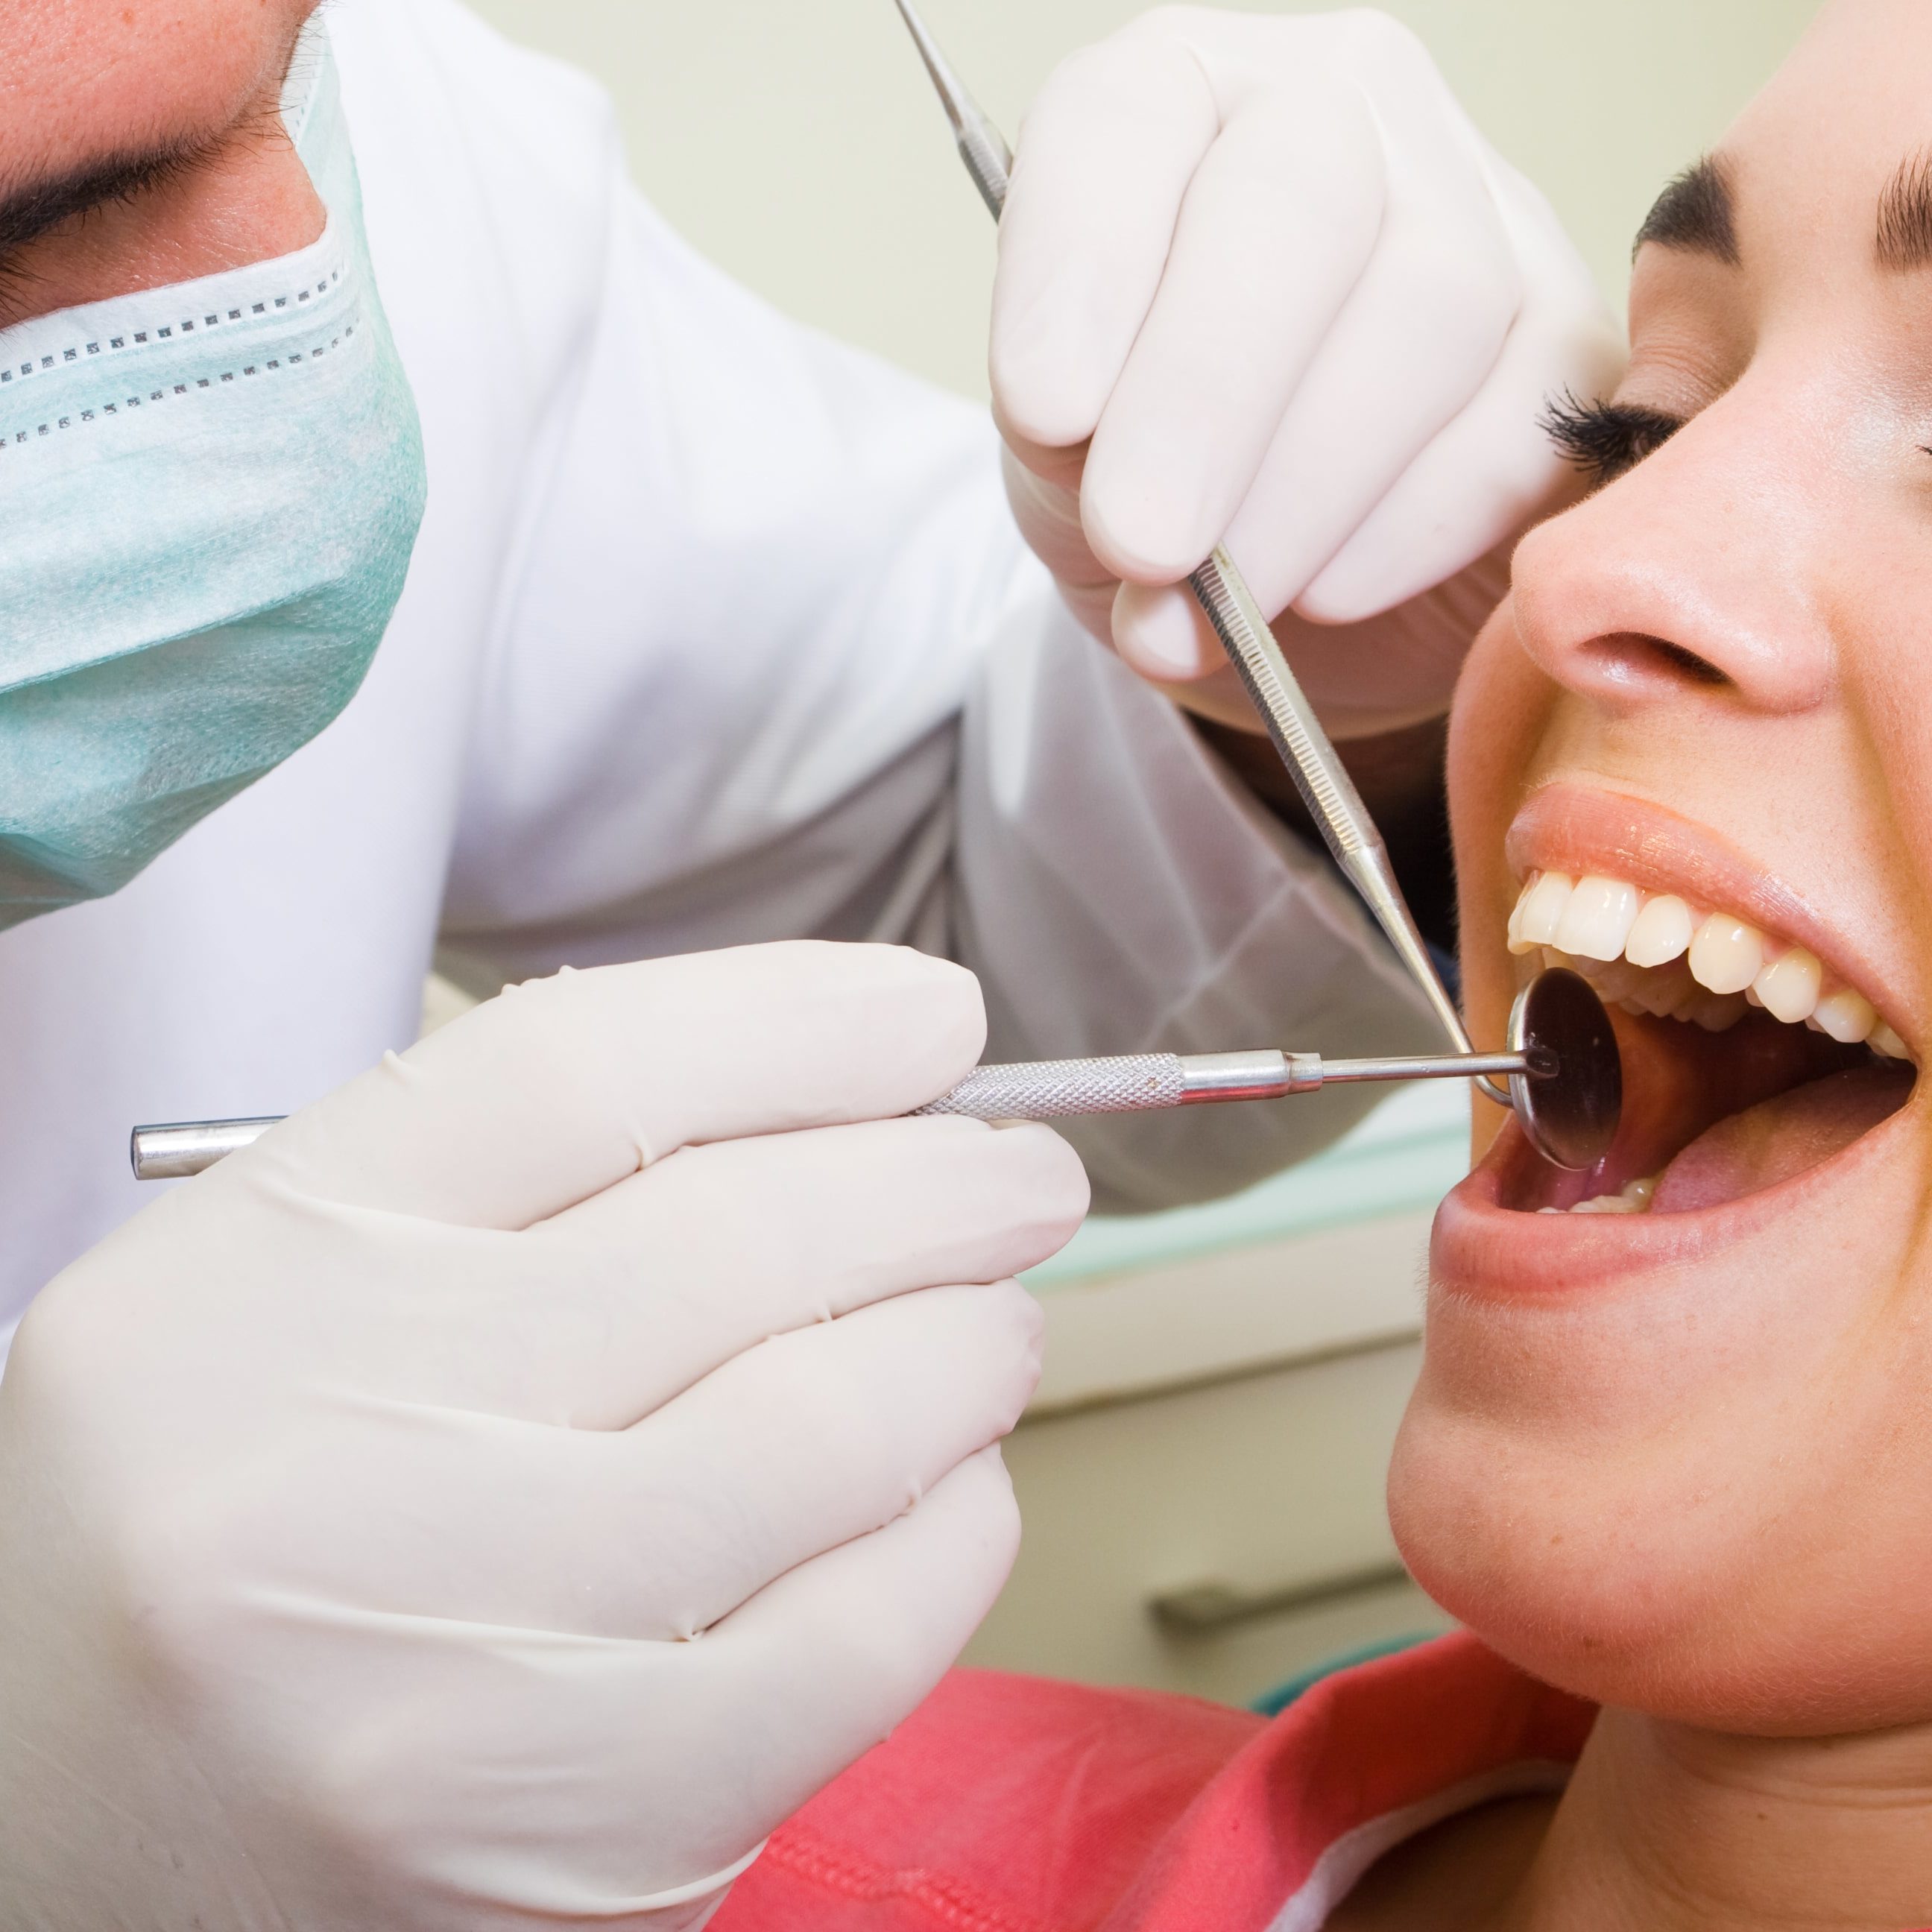 Does Tooth Bonding Break